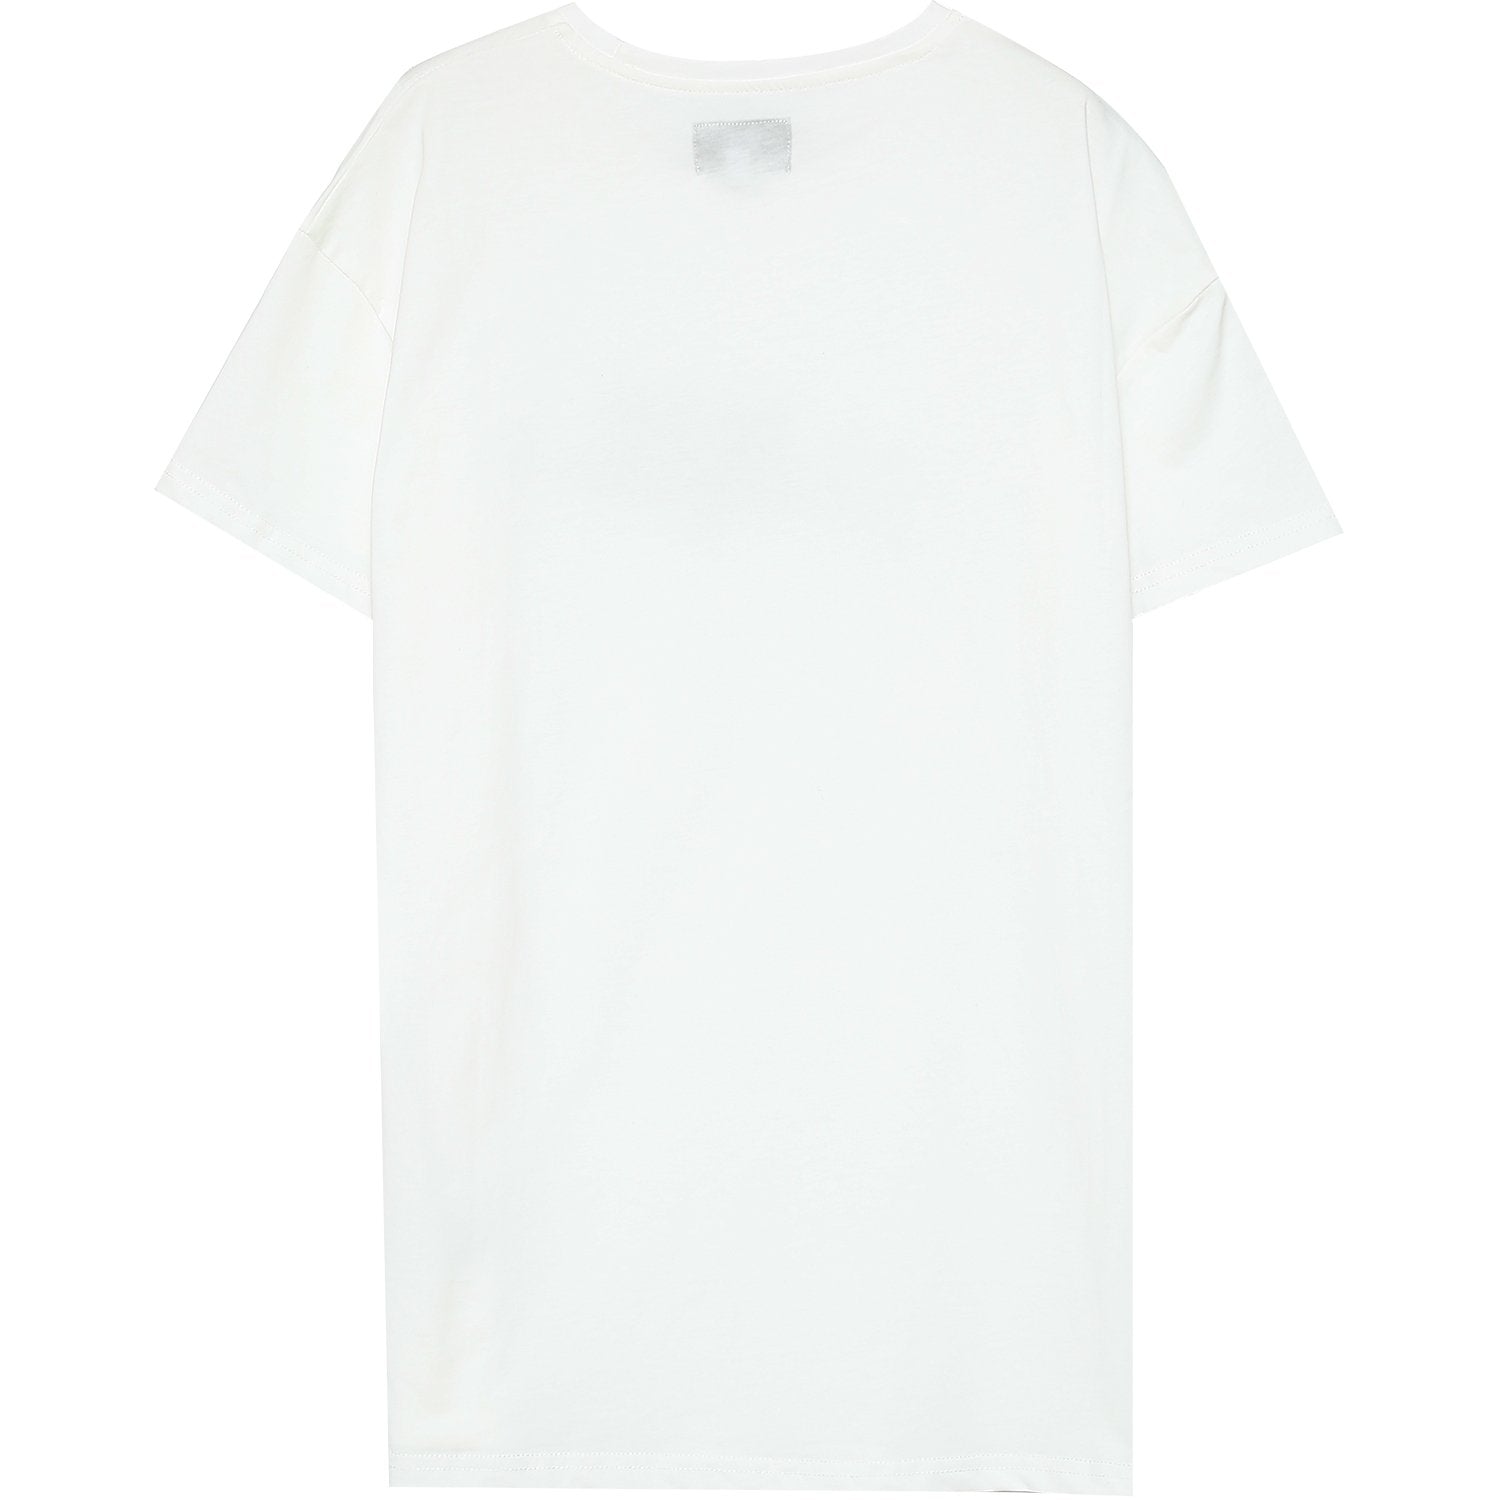 T-shirt Paris signature blanc